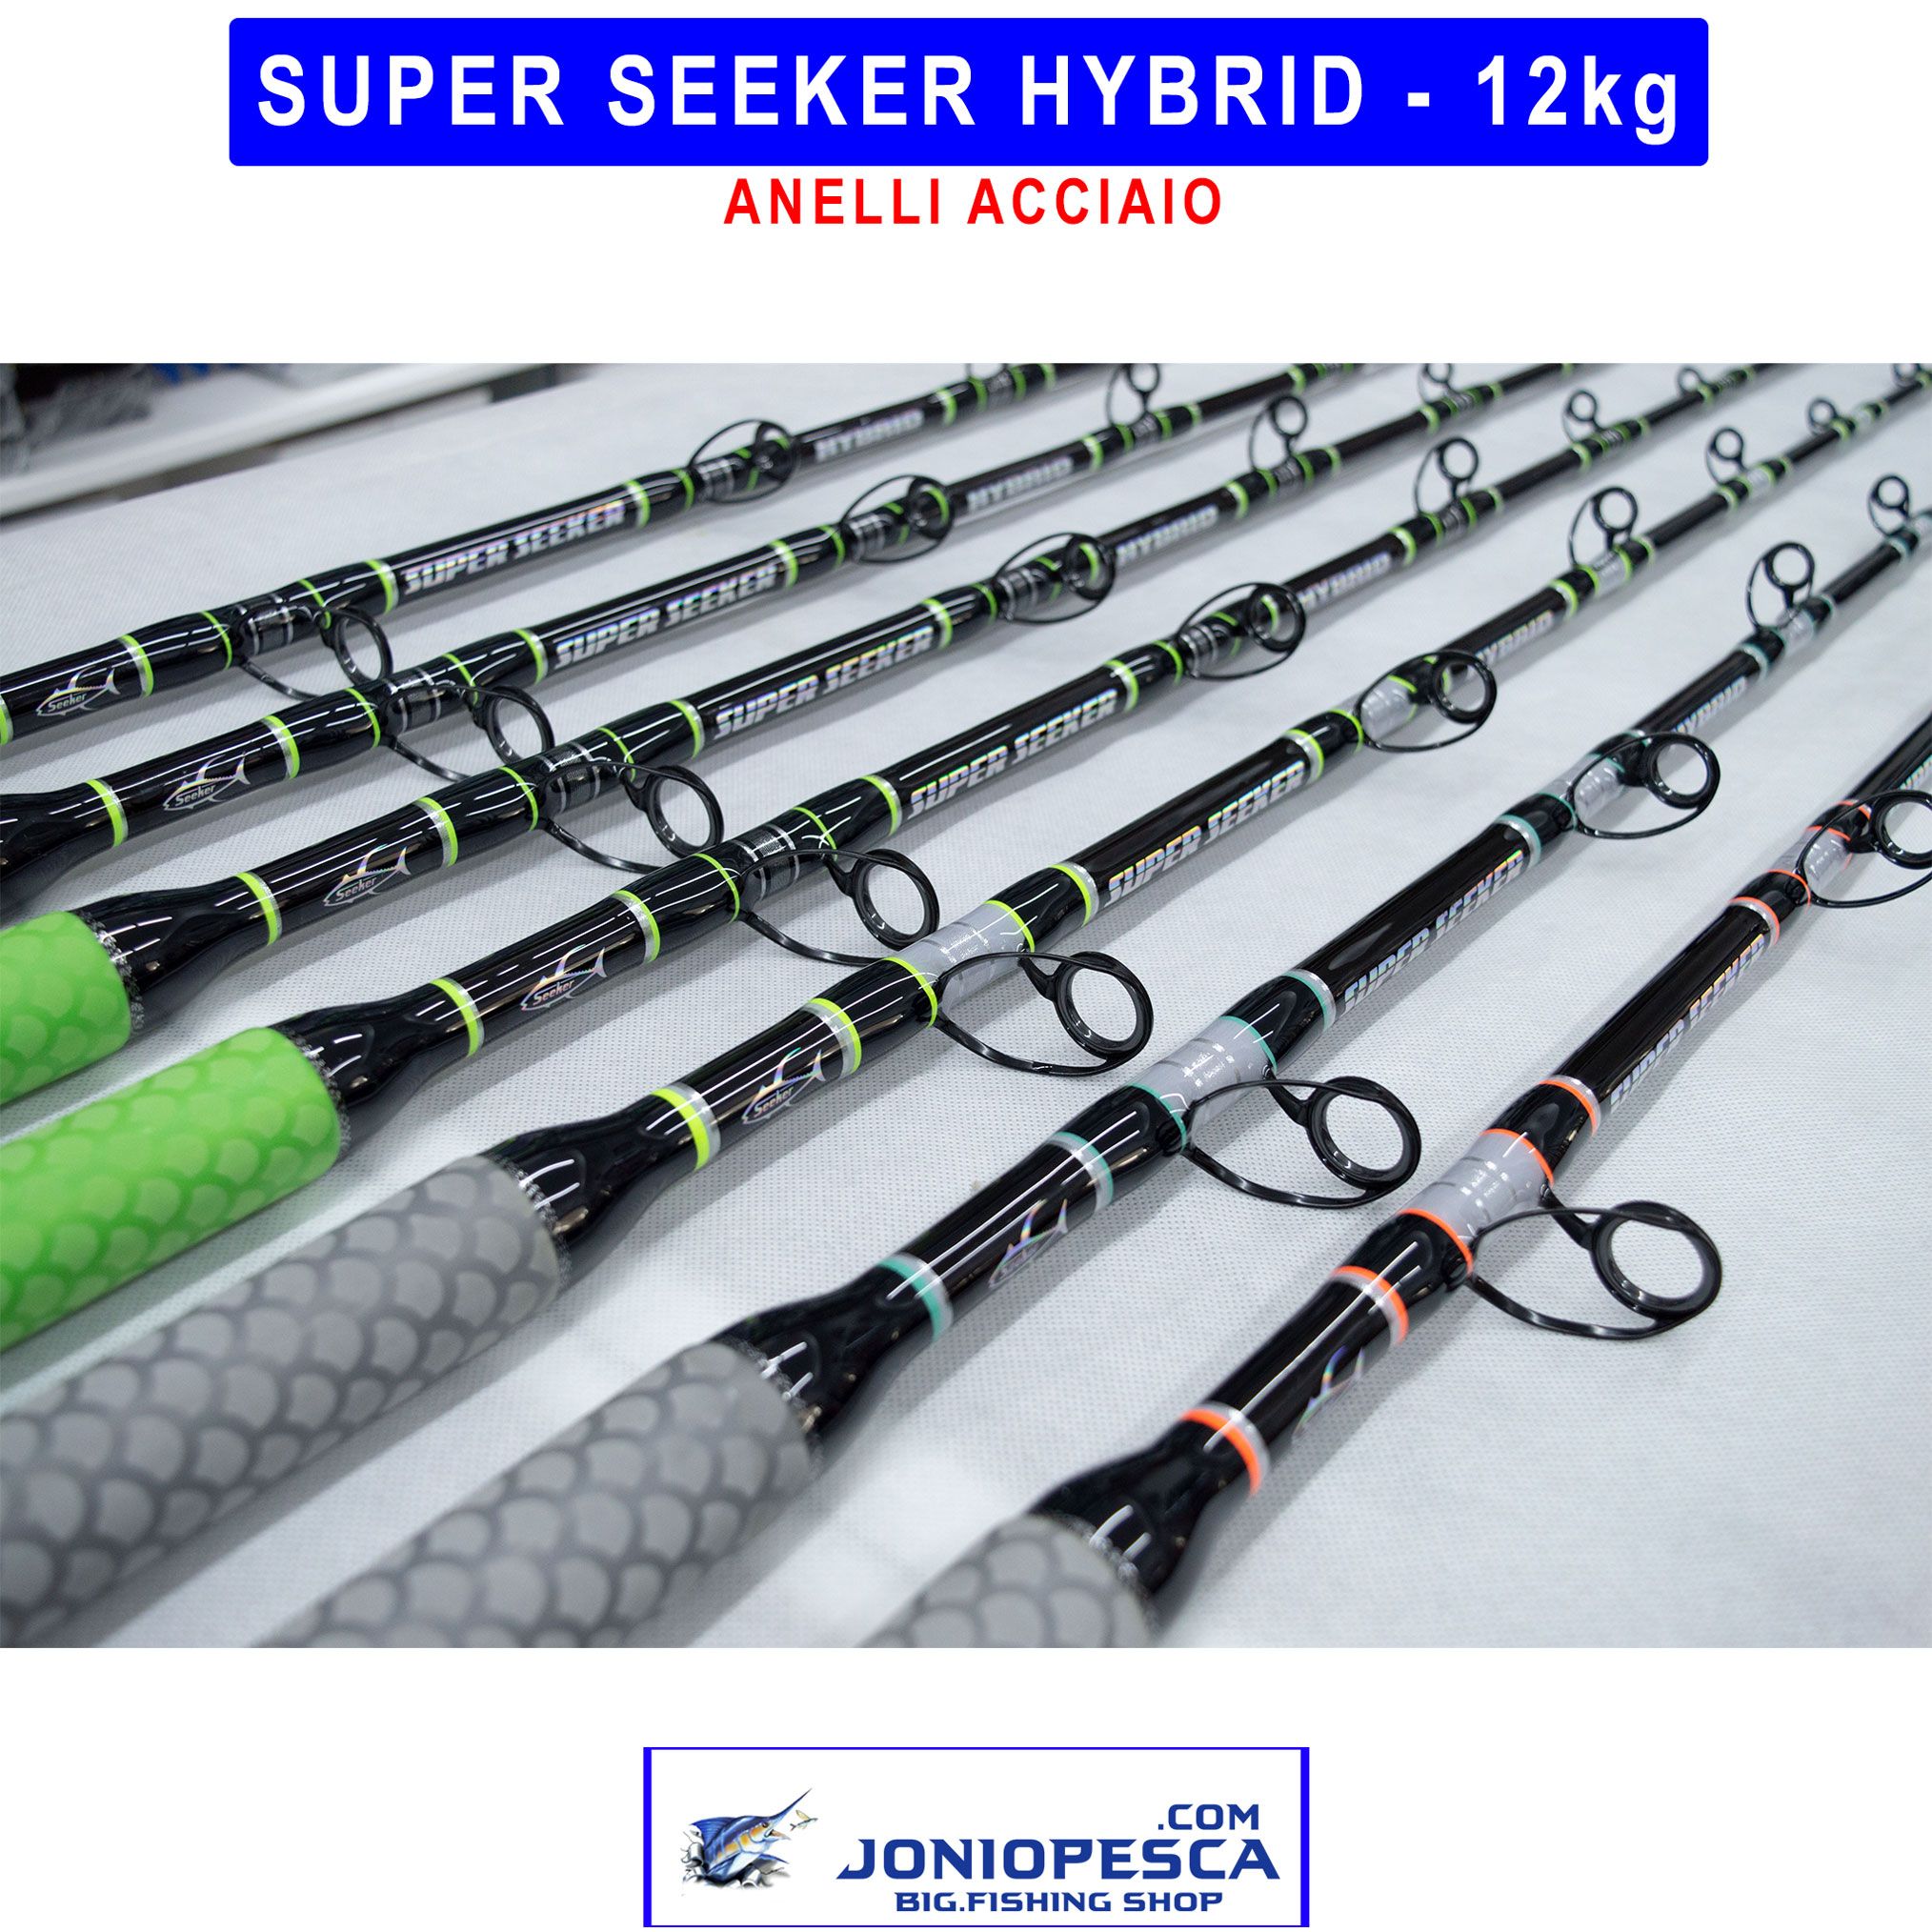 super-seeker-hybrid-12kg-anelli-acciaio-1